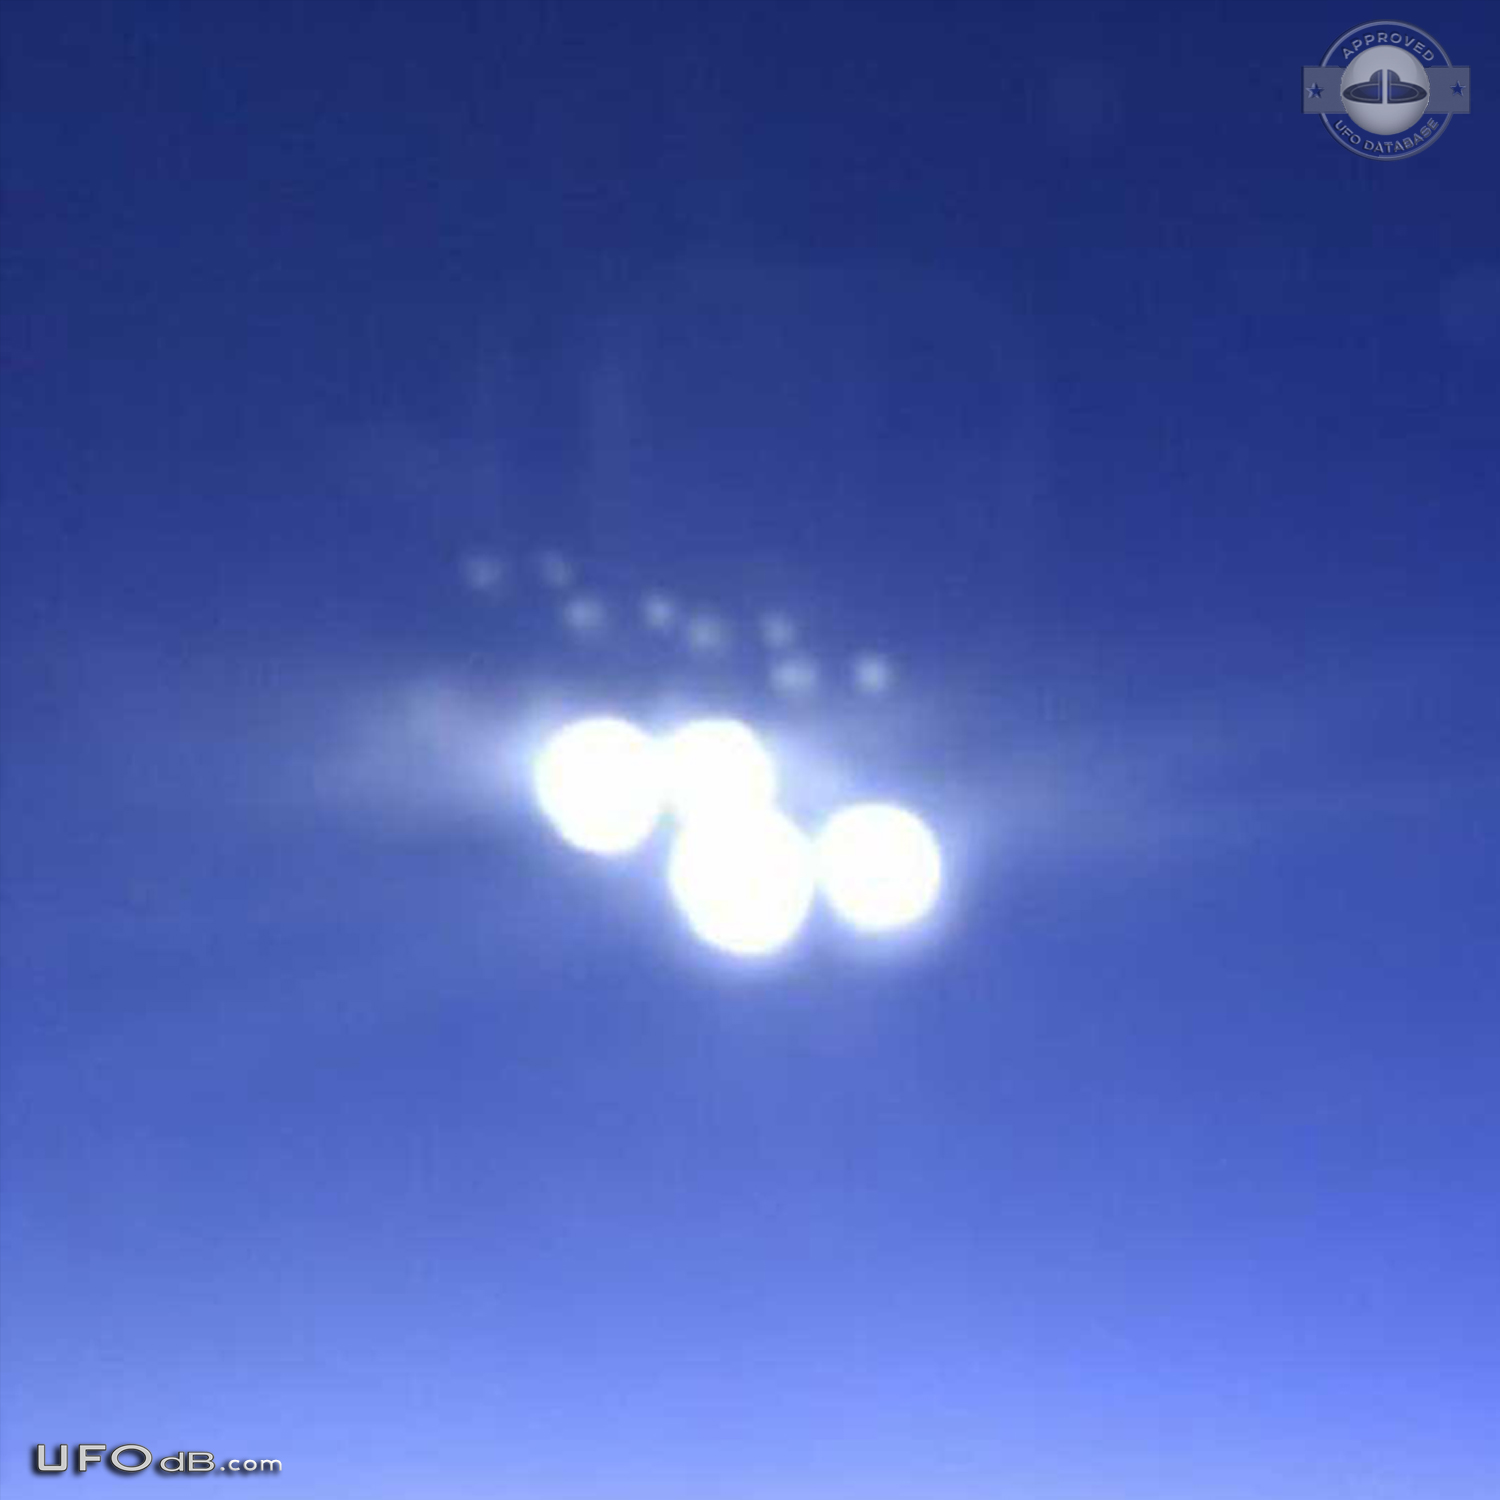 100 airplane passengers panic at UFO sighting - Konia, Cyprus 2012 UFO Picture #443-2